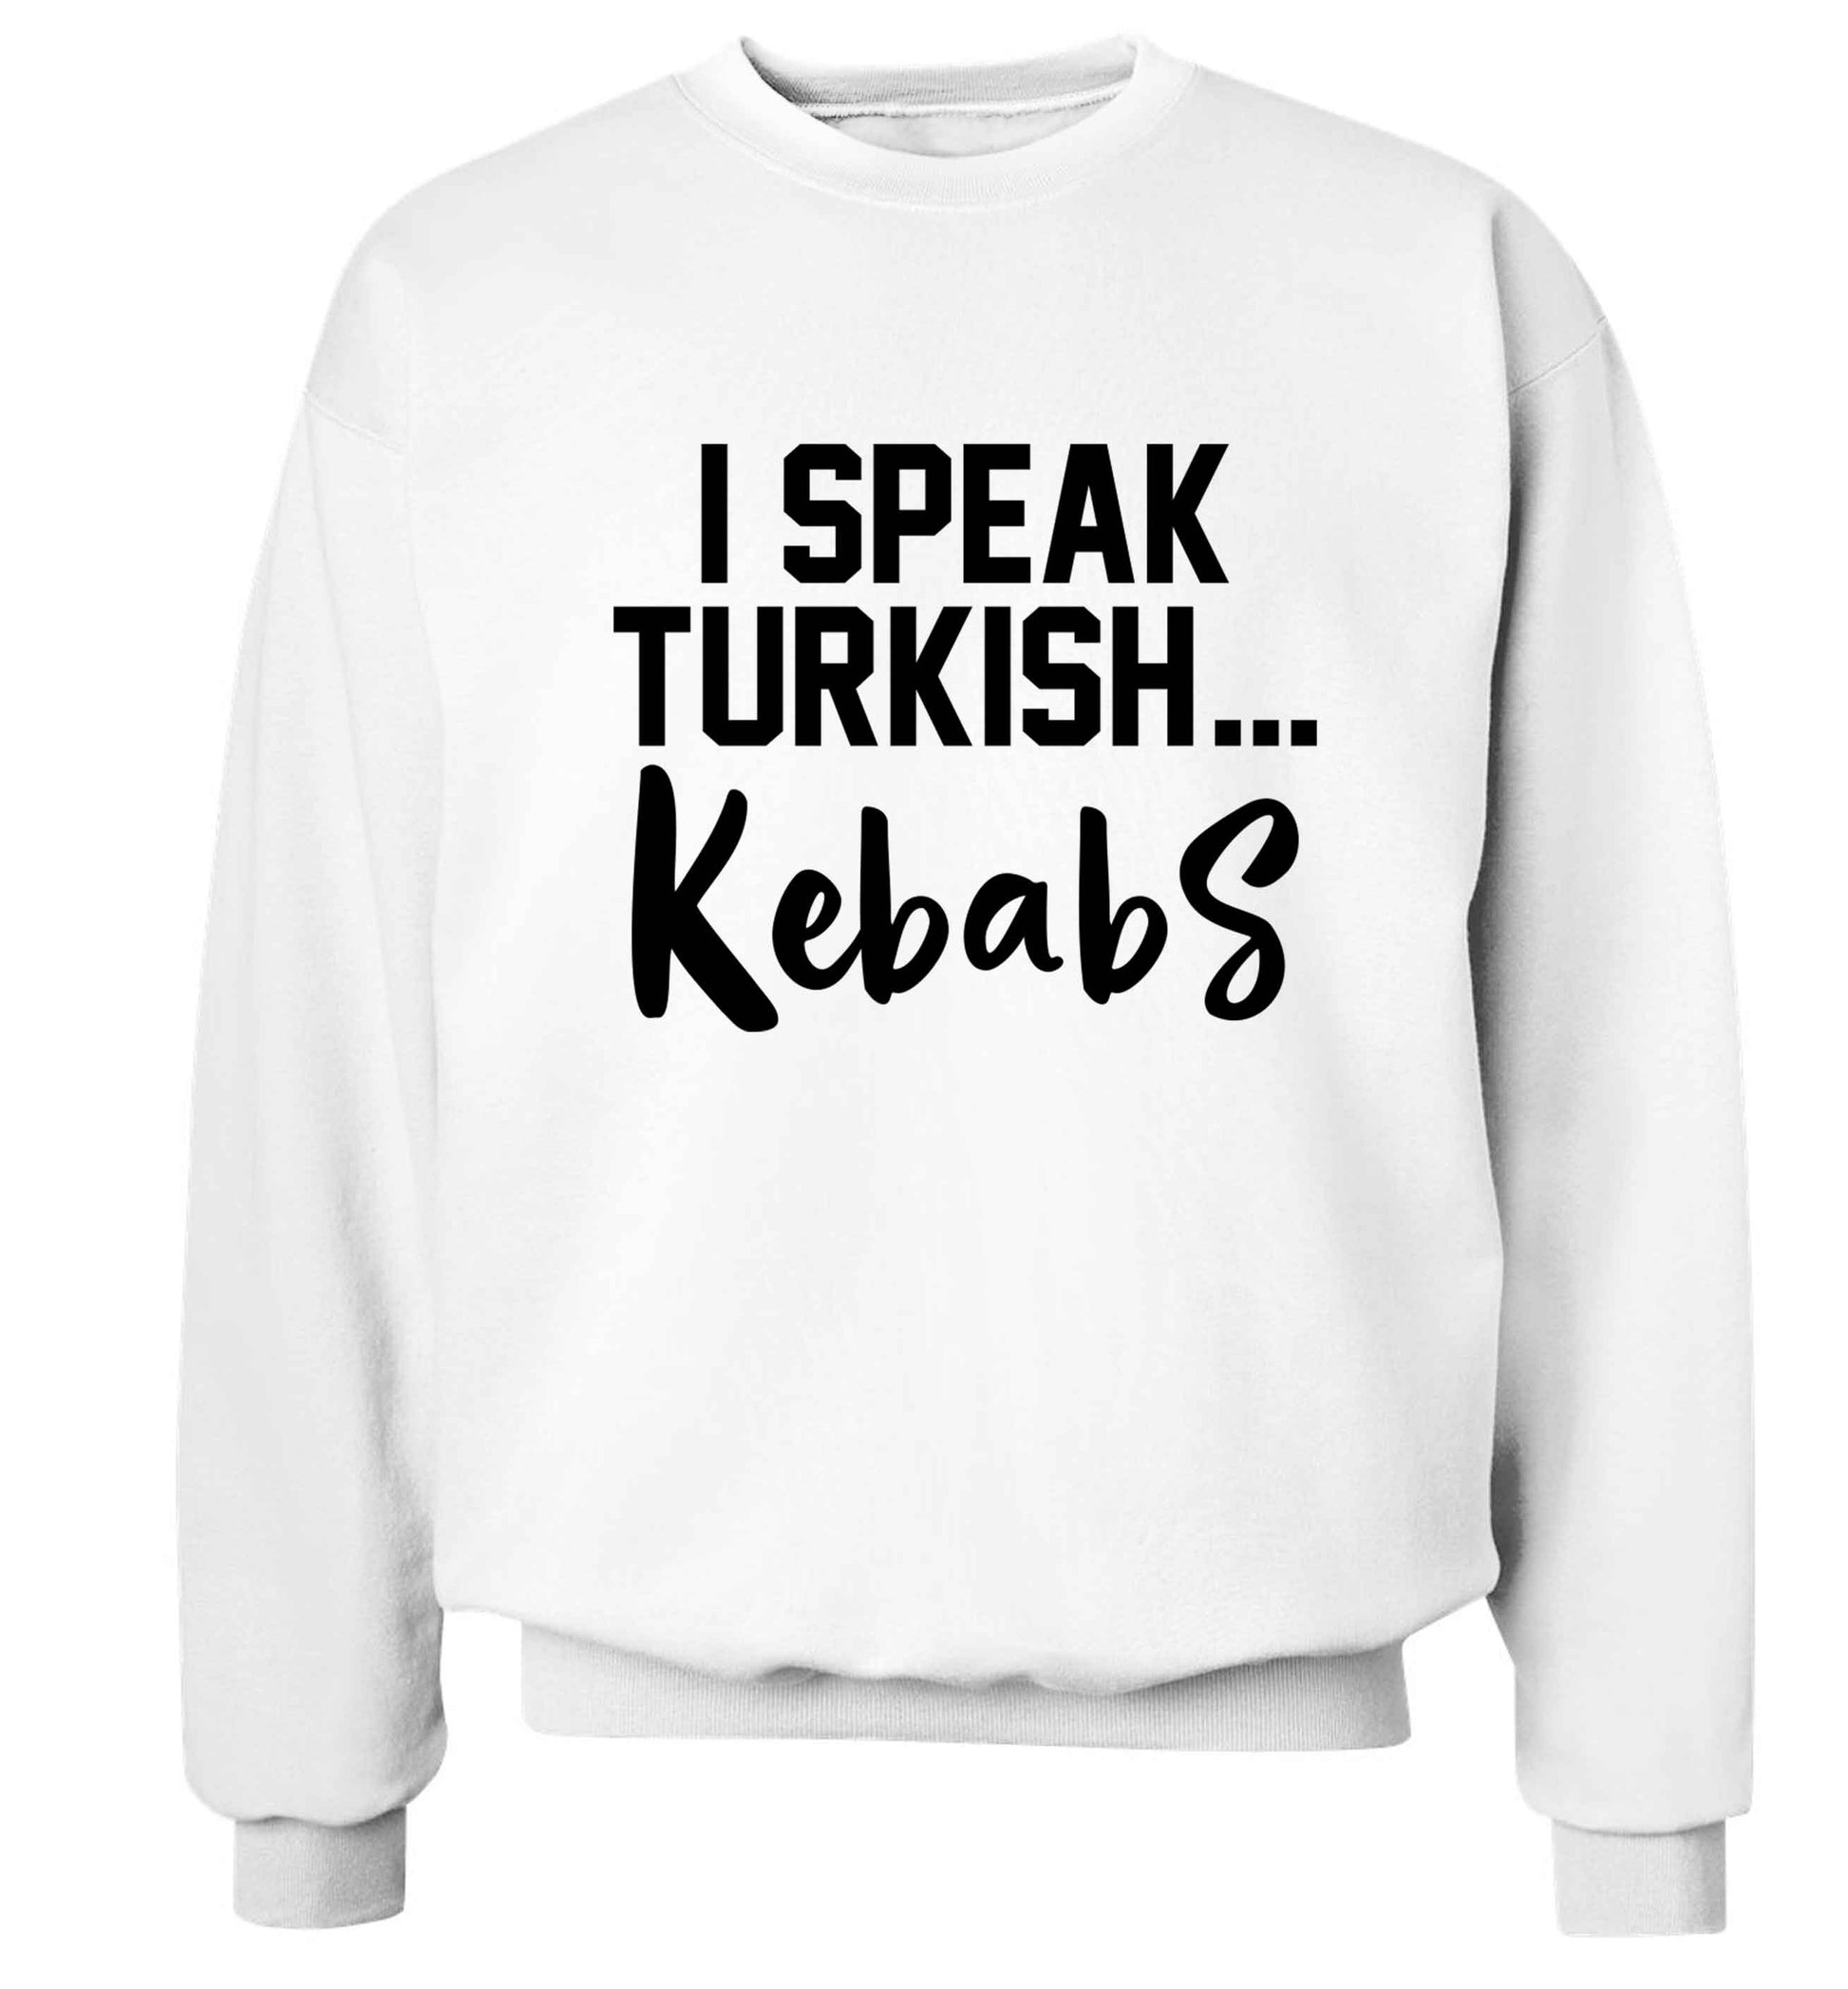 I speak Turkish...kebabs Adult's unisex white Sweater 2XL